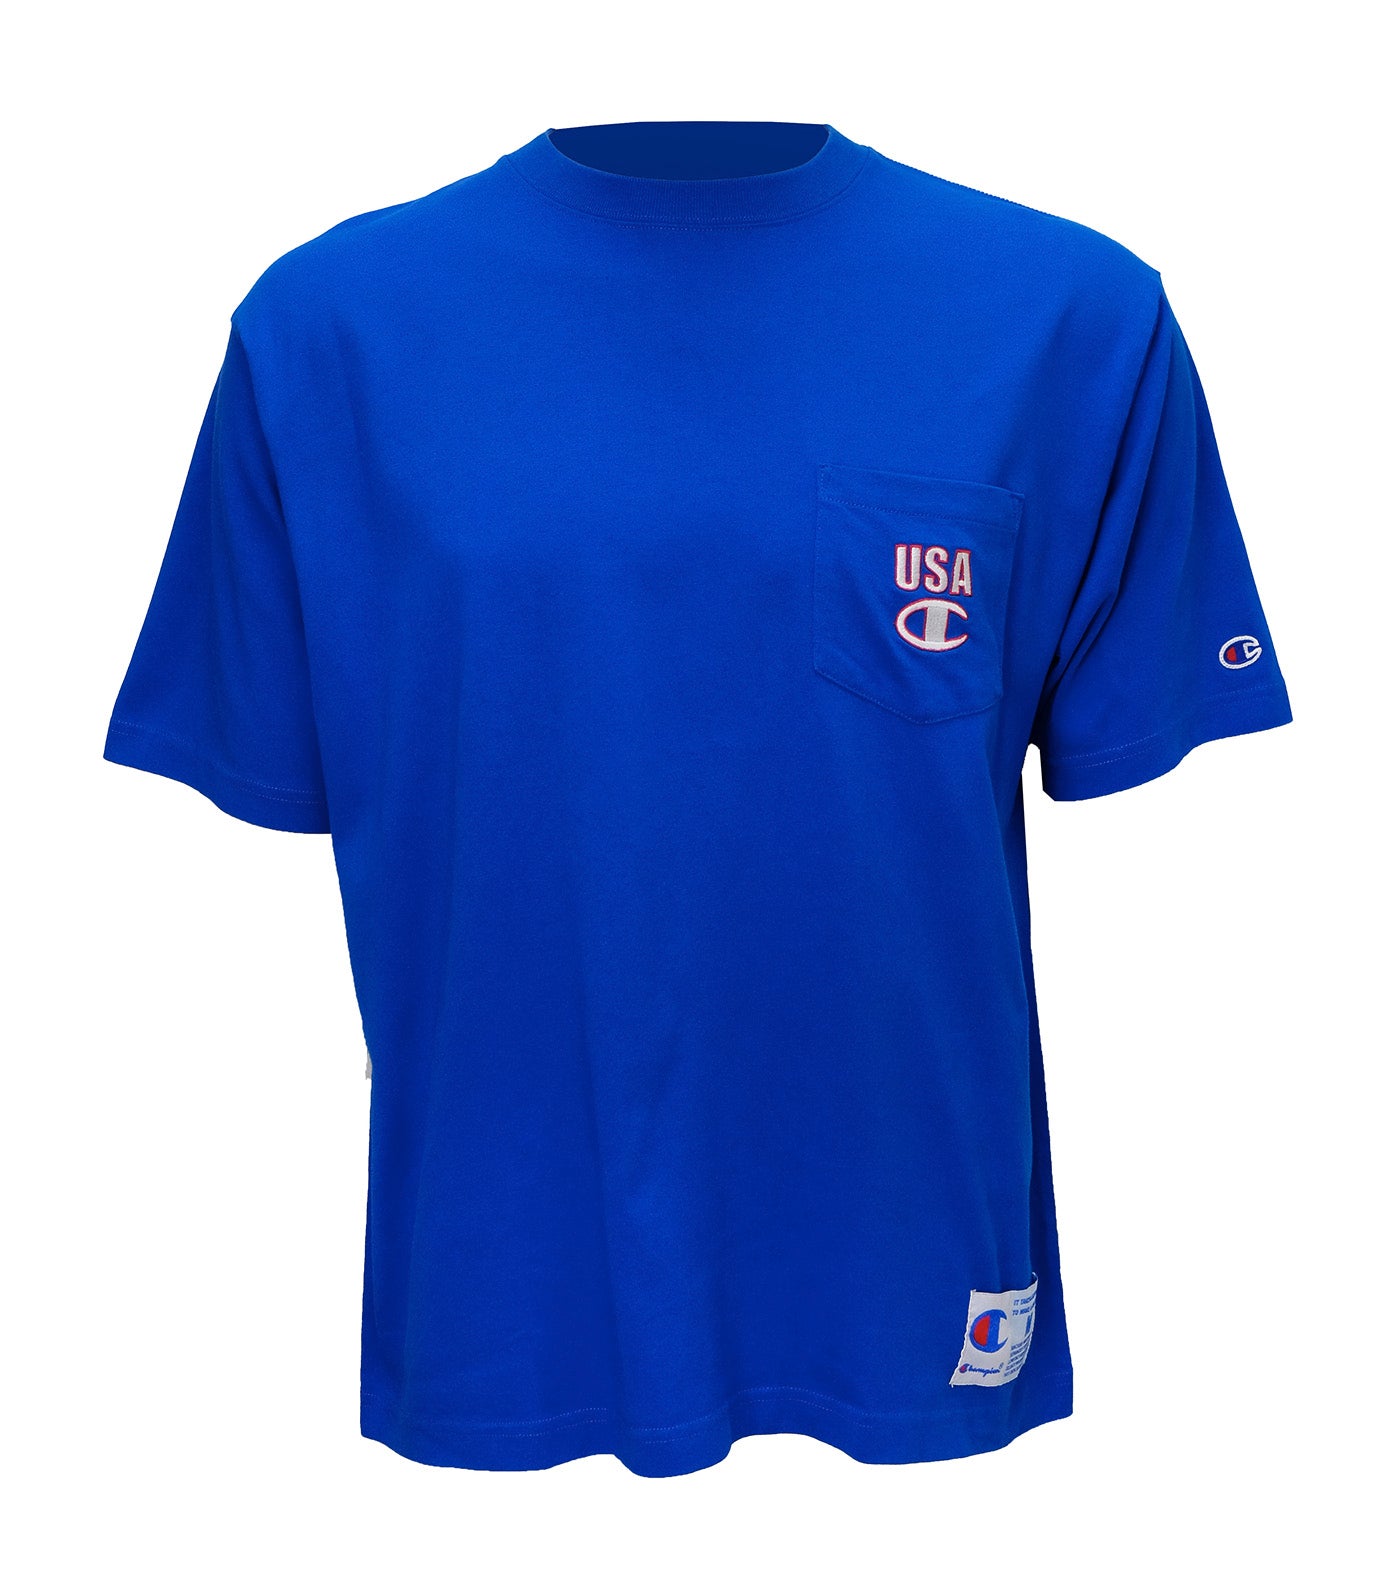 Japan Line Short Sleeve Pocket T-Shirt Blue